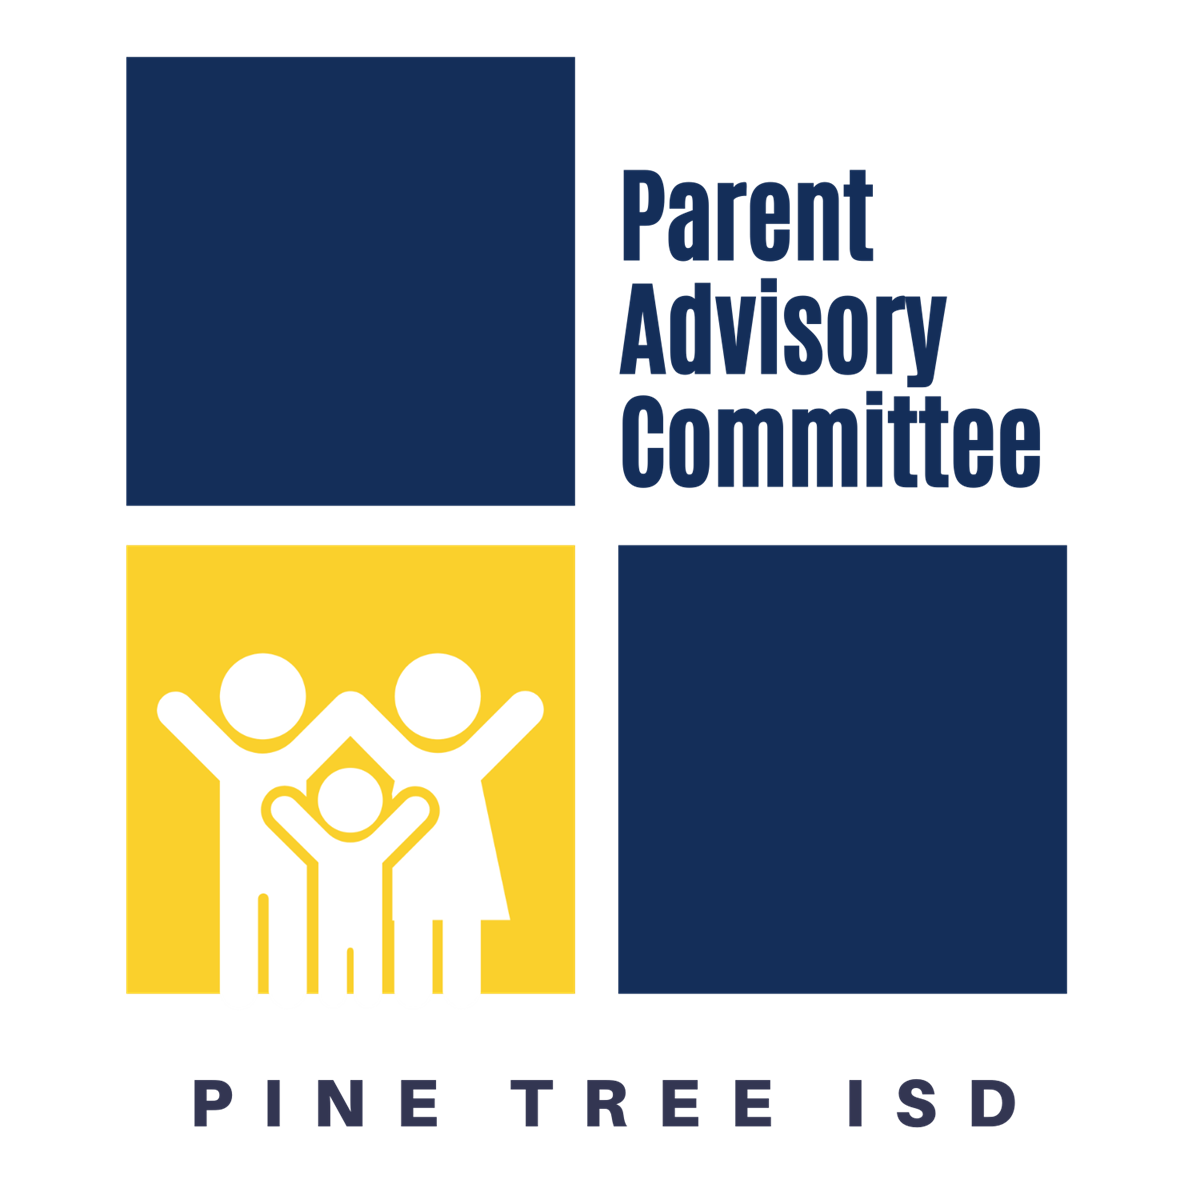 Parent Advisory Committee logo